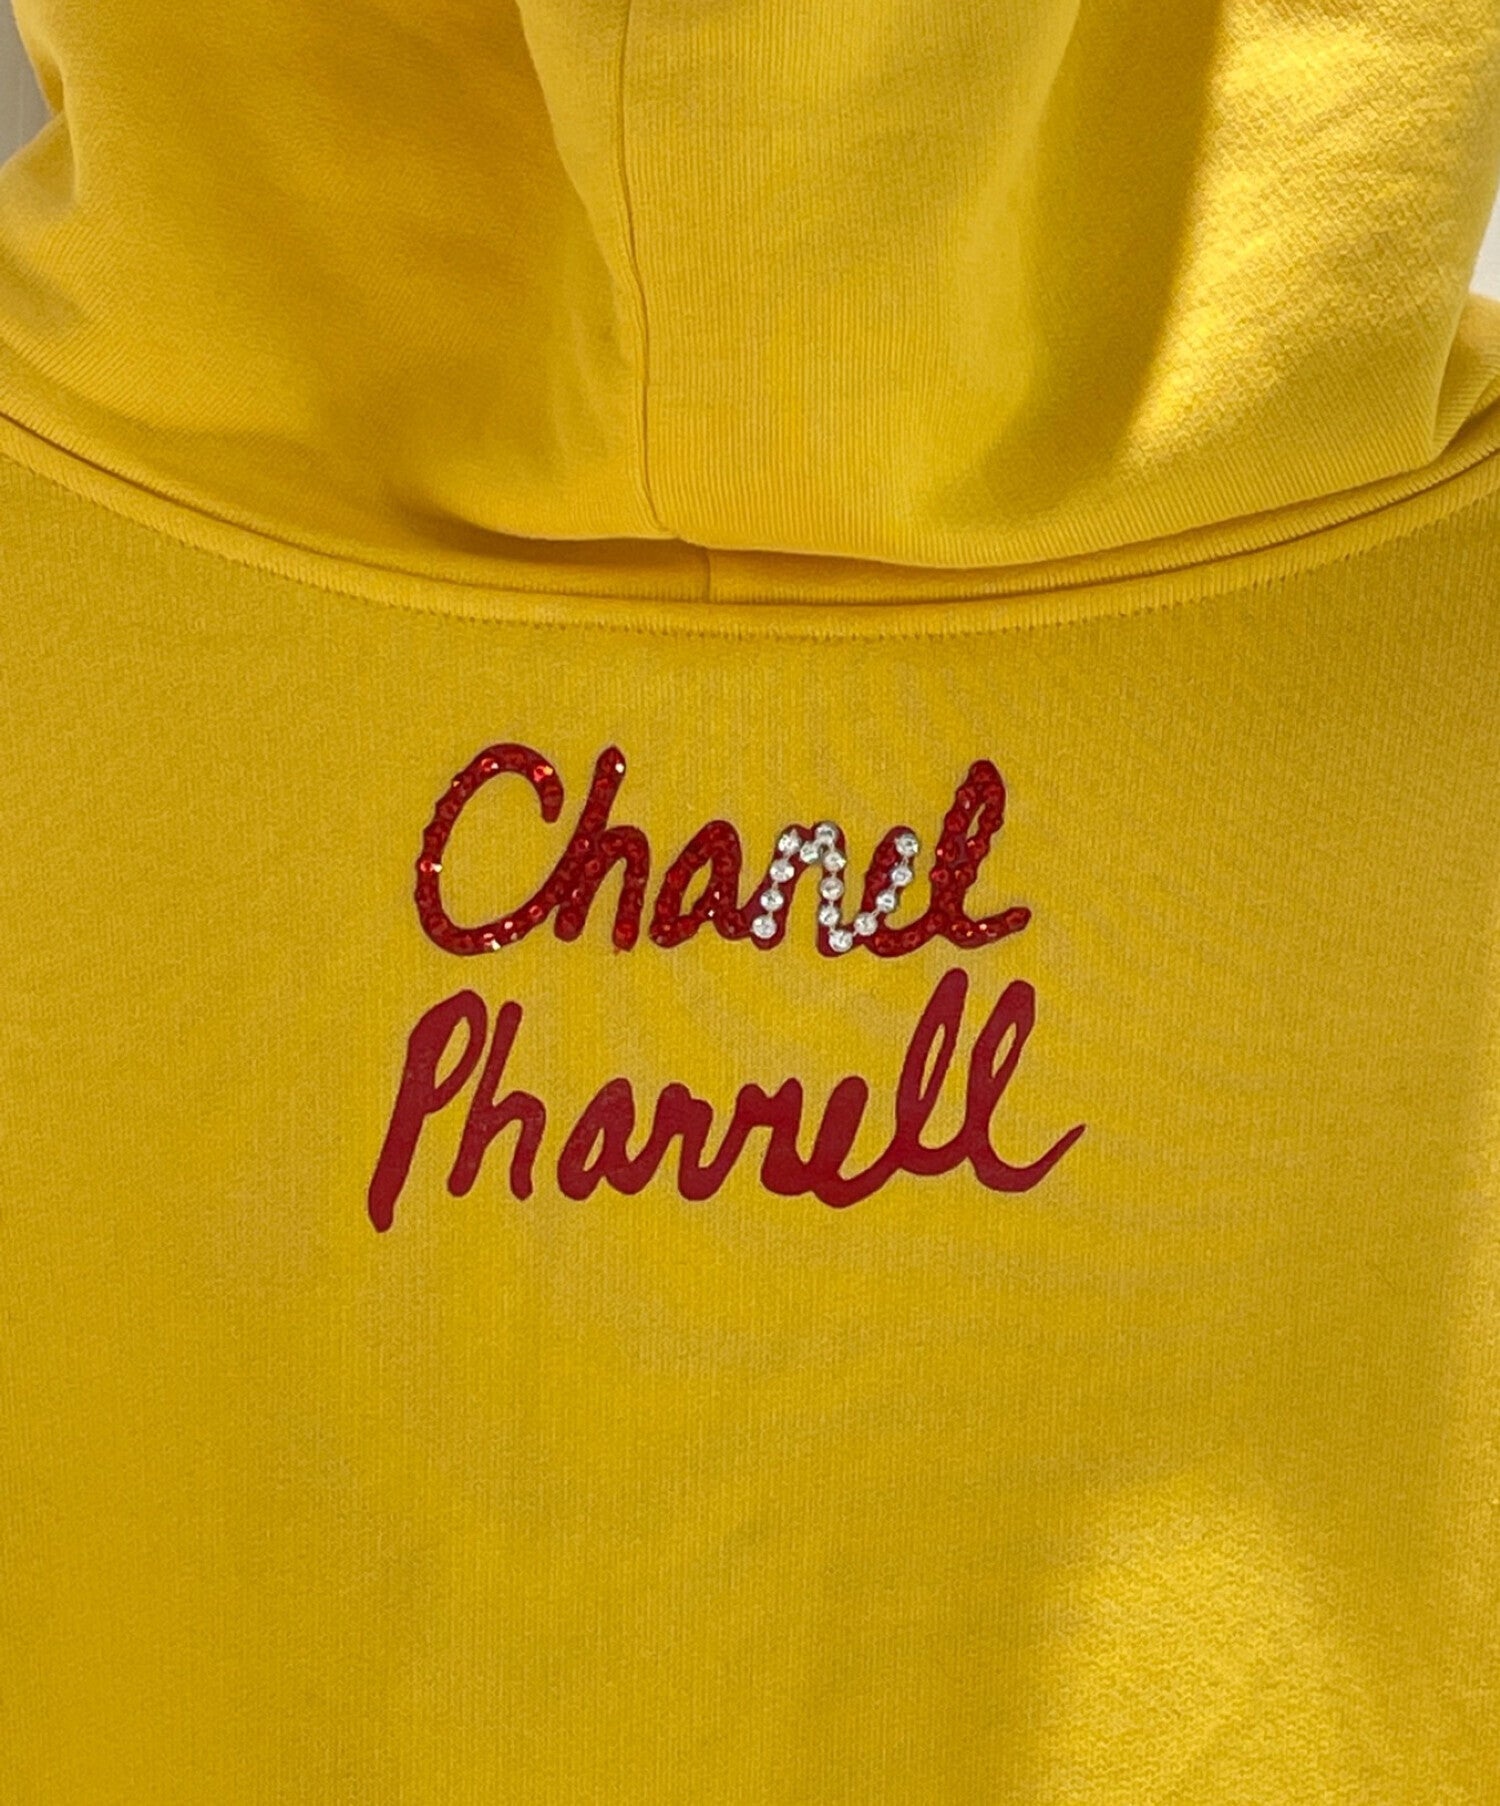 Pharrell Williams in Chanel Sweatshirt